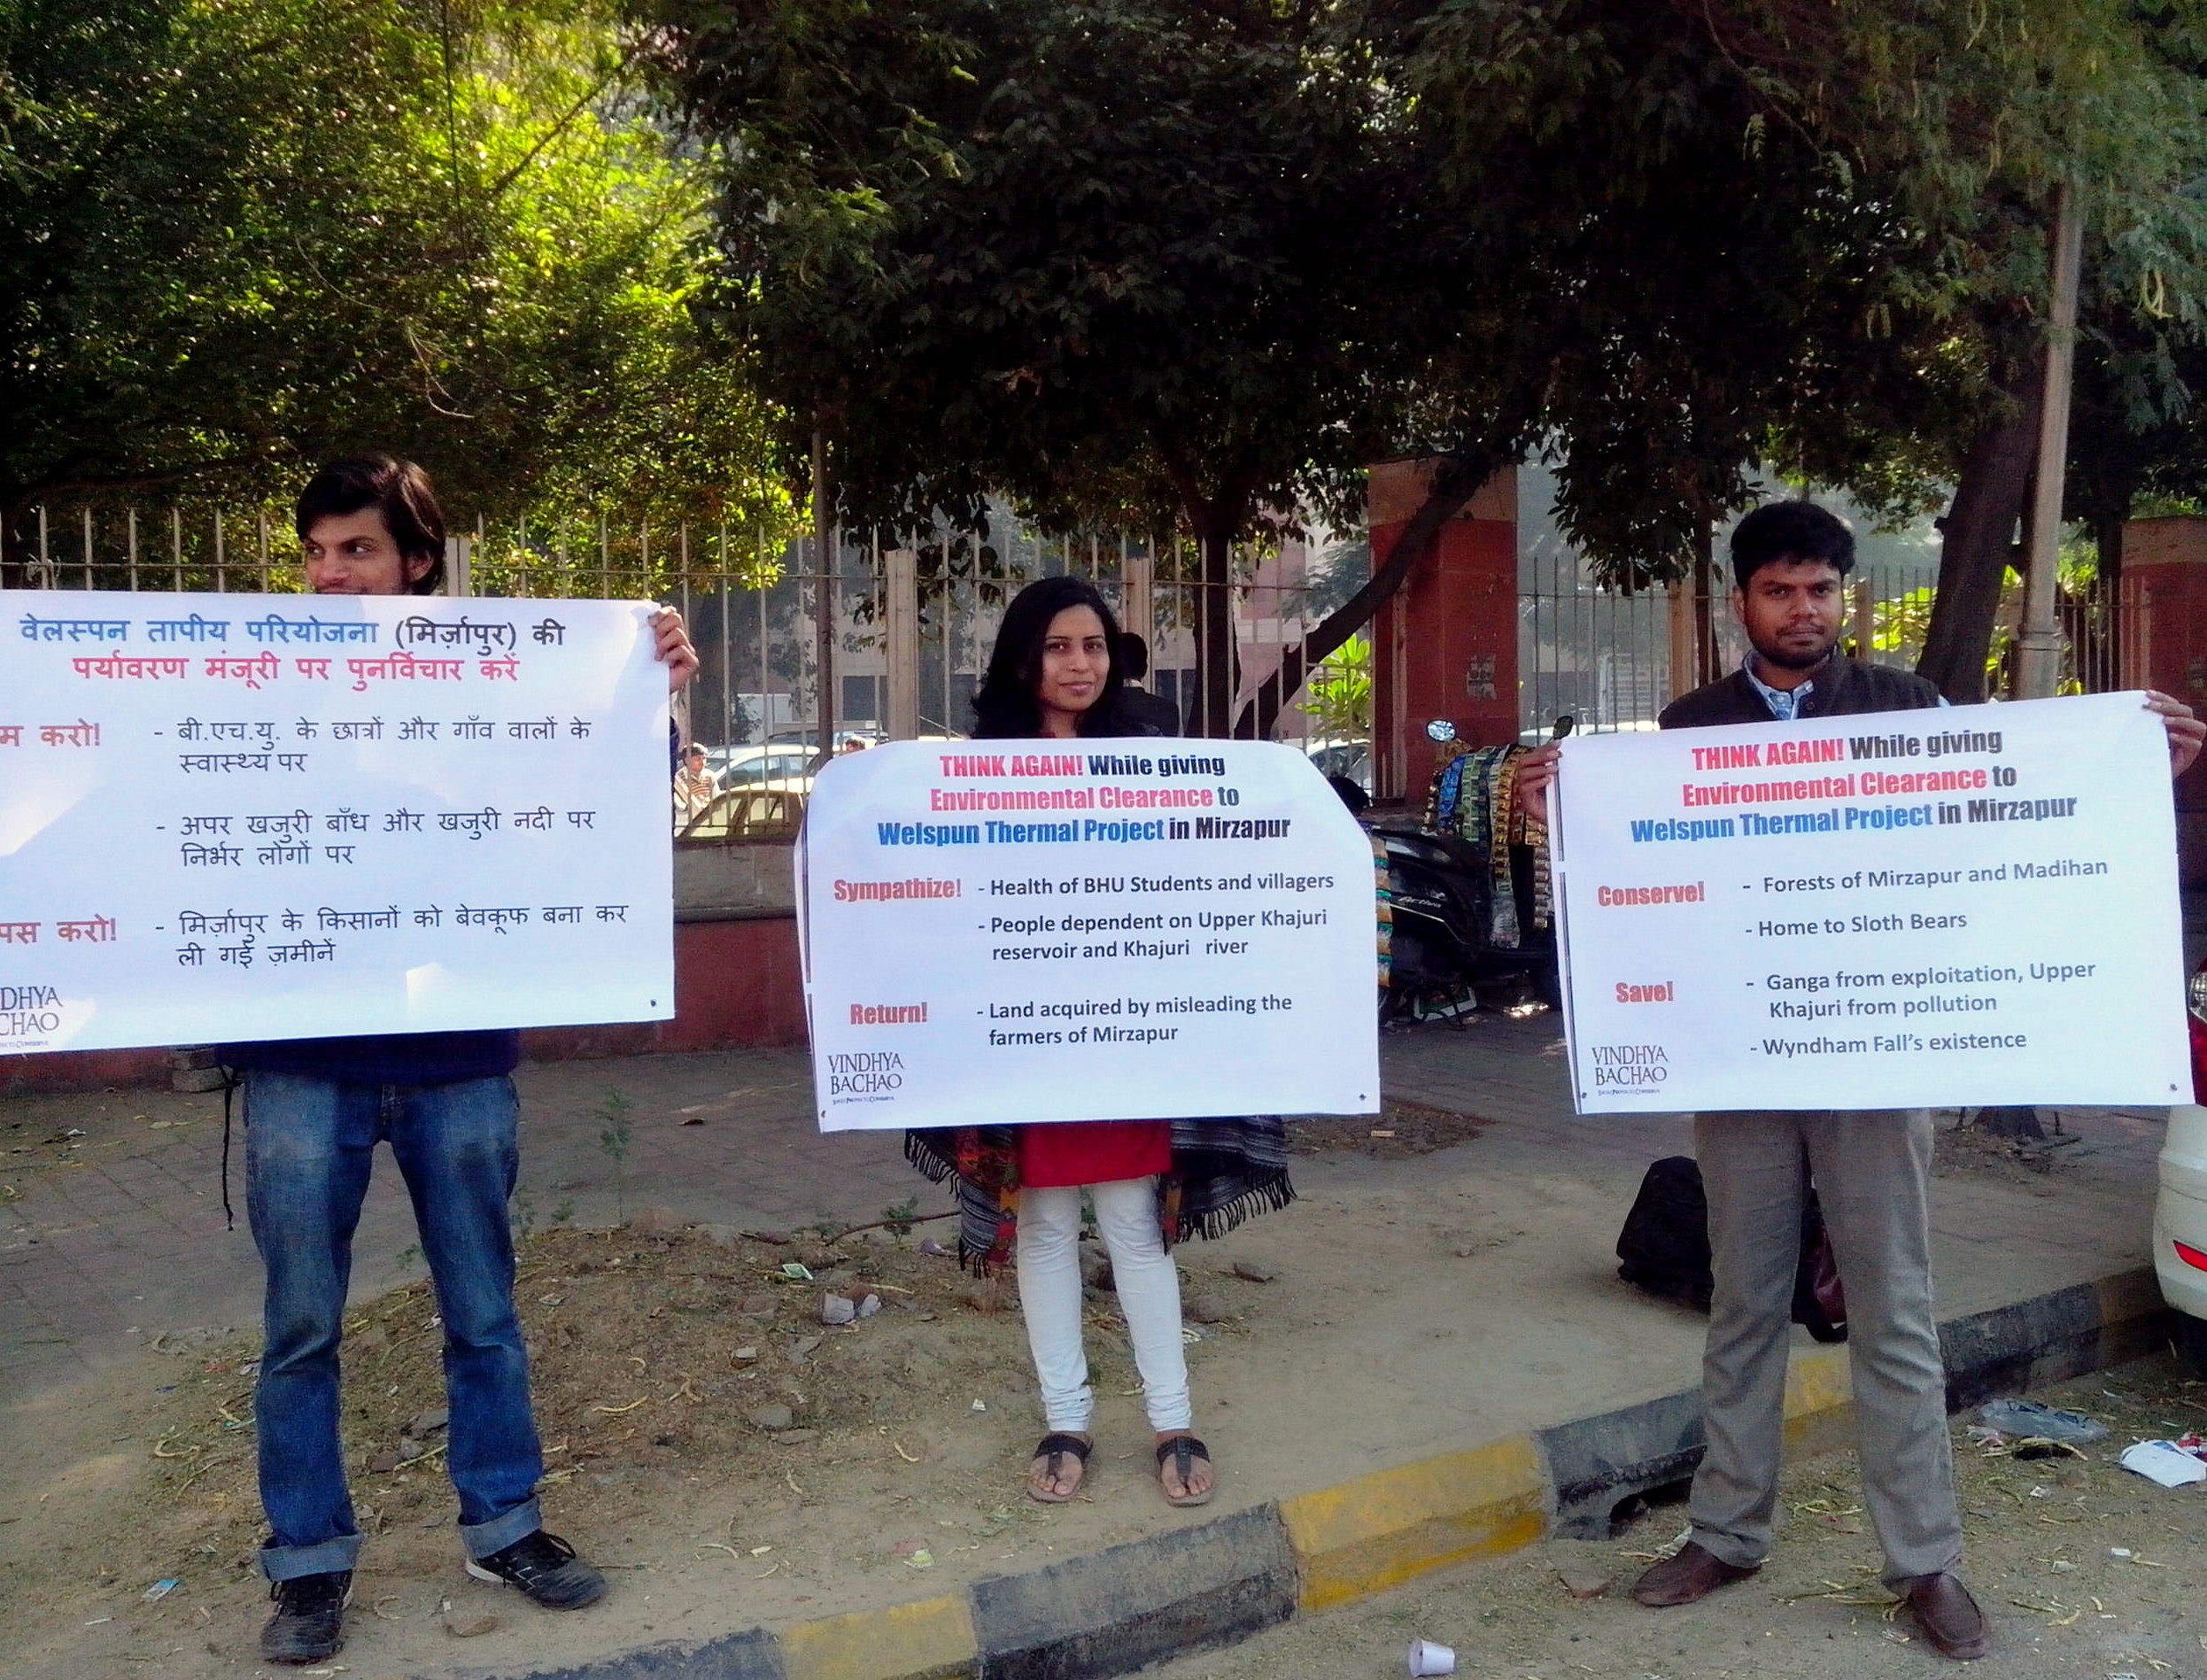 Raghav Saraswat, Preeta Dhar and Debadityo Sinha with banners at SCOPE Complex, Delhi